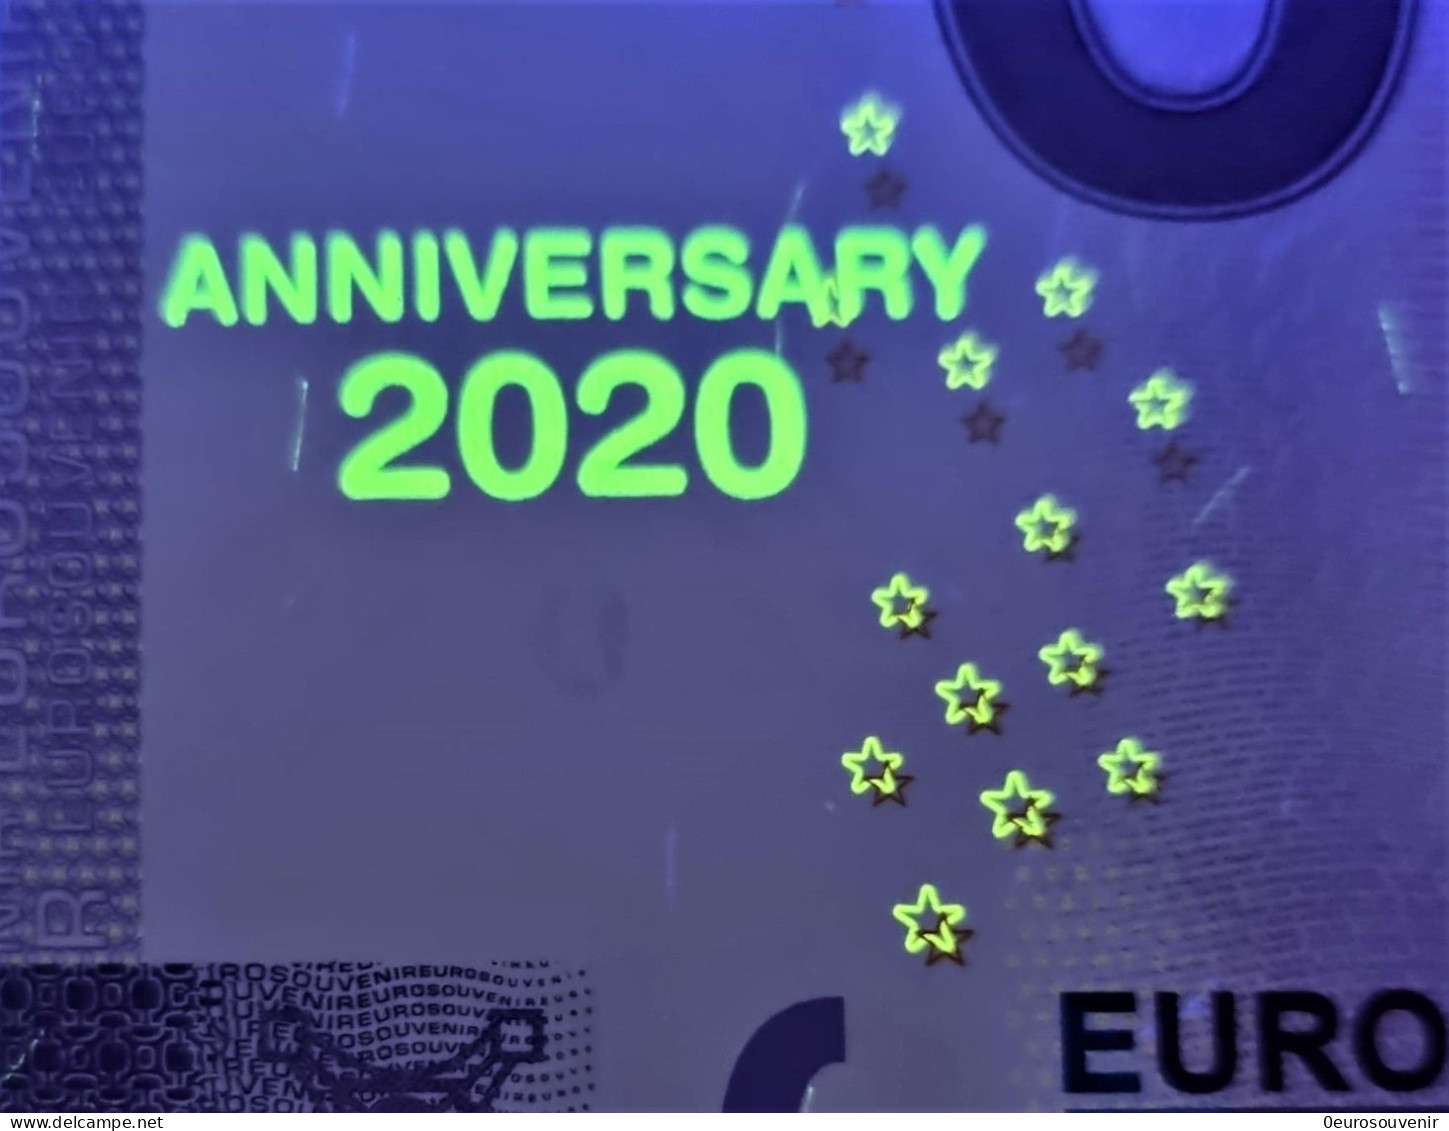 0-Euro XEGE 2022-2 LEIPZIG HAUPTBAHNHOF - ICE ZUG  Set NORMAL+ANNIVERSARY - Pruebas Privadas